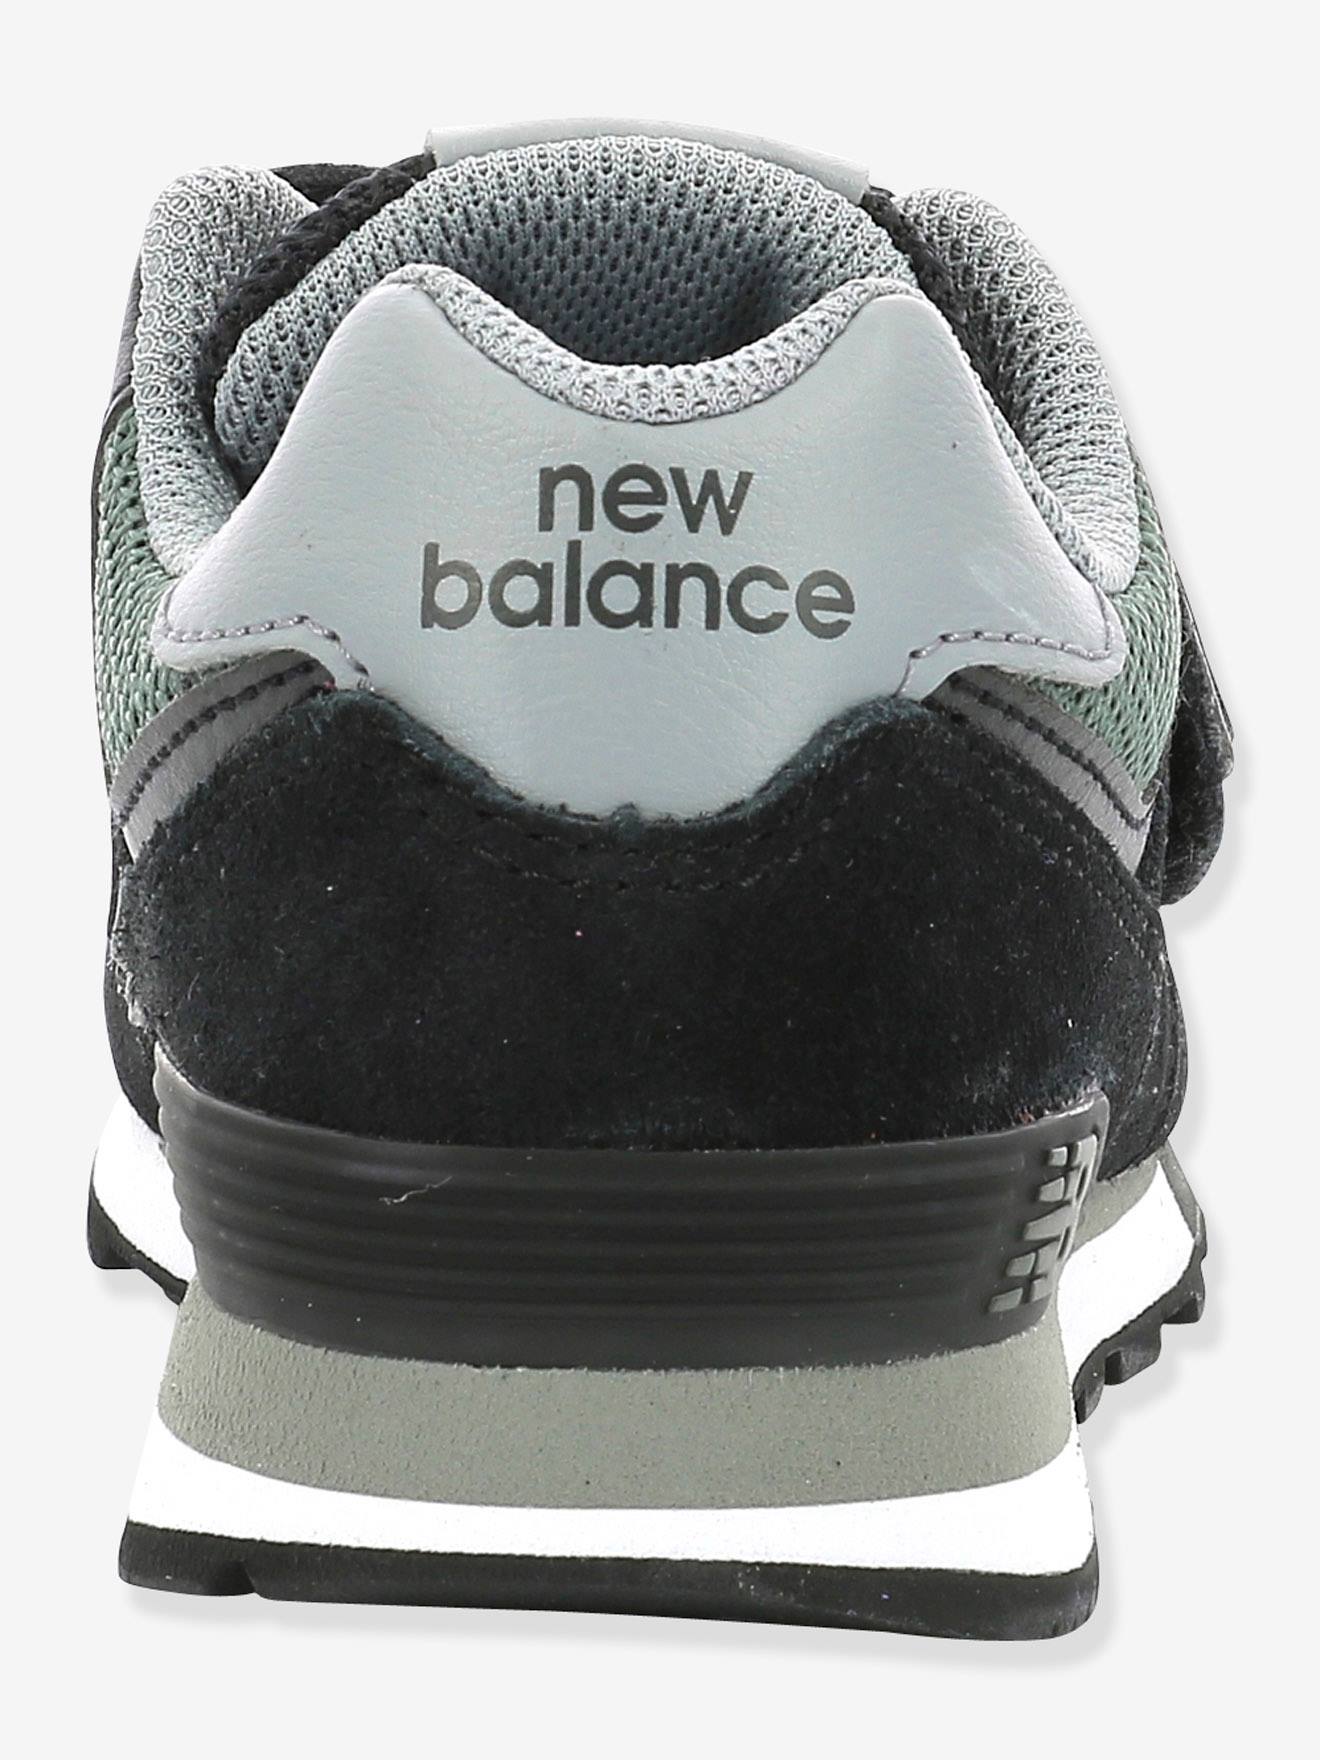 basket new balance scratch buy clothes shoes online